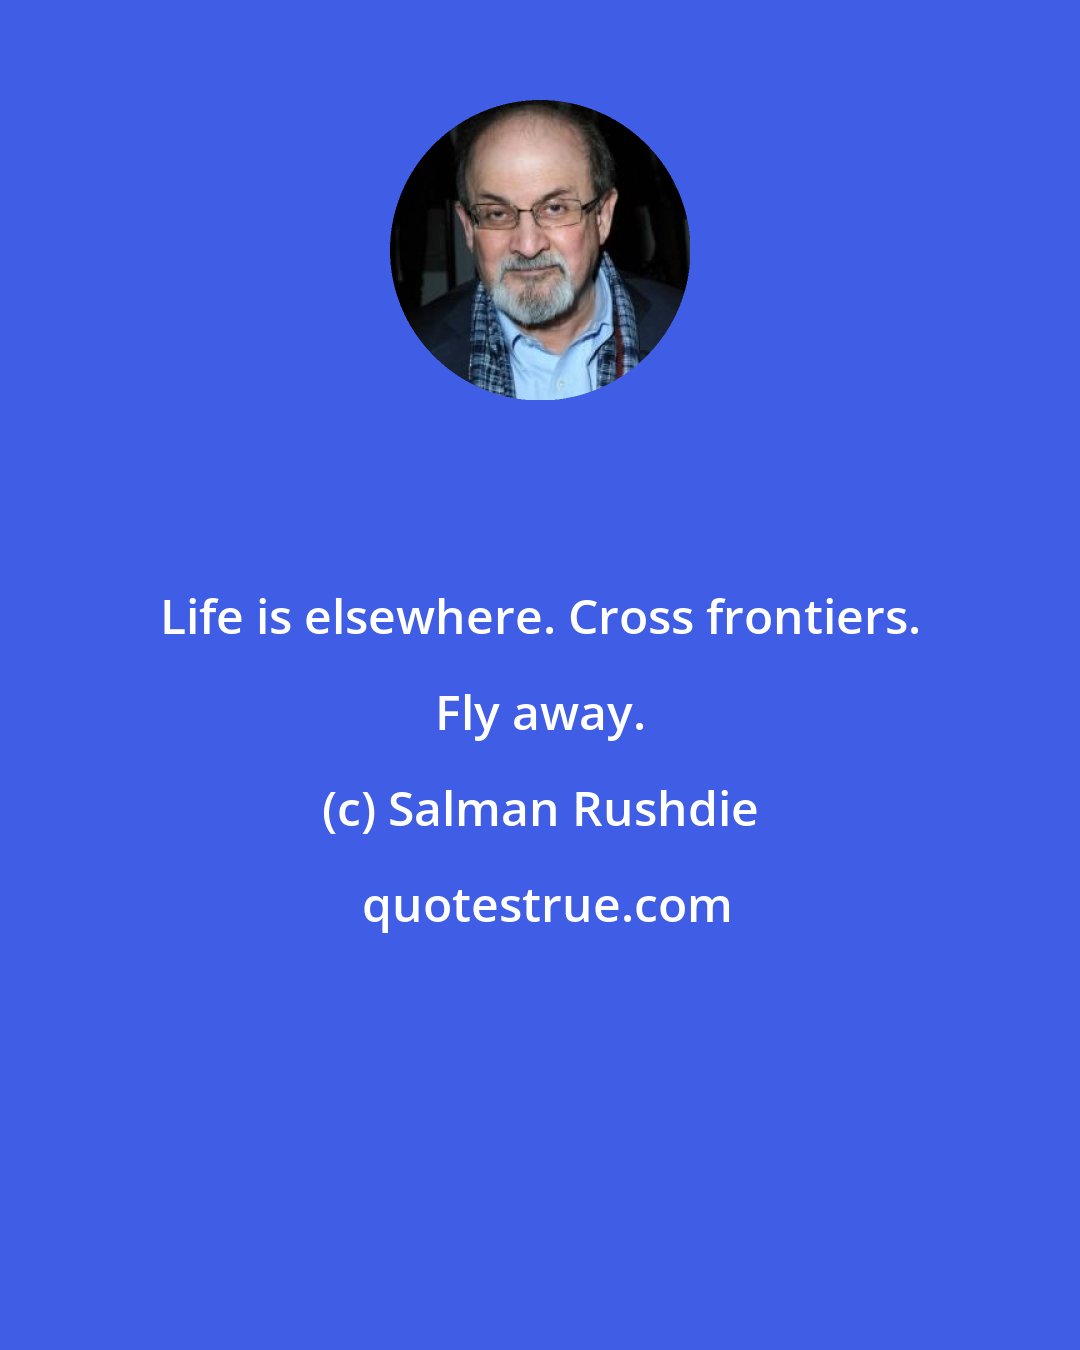 Salman Rushdie: Life is elsewhere. Cross frontiers. Fly away.